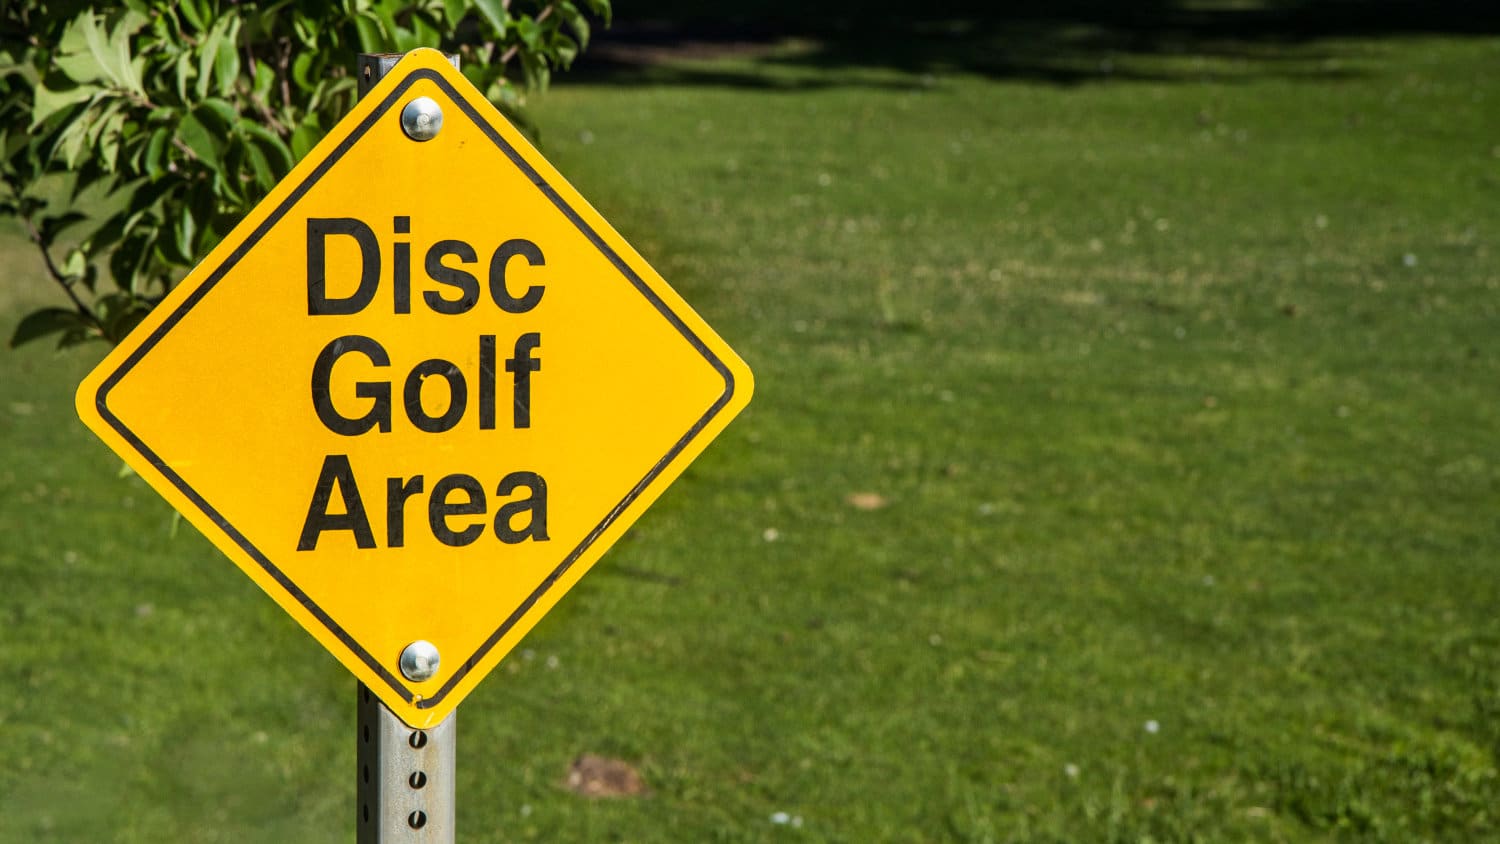 Disc golf area sign.